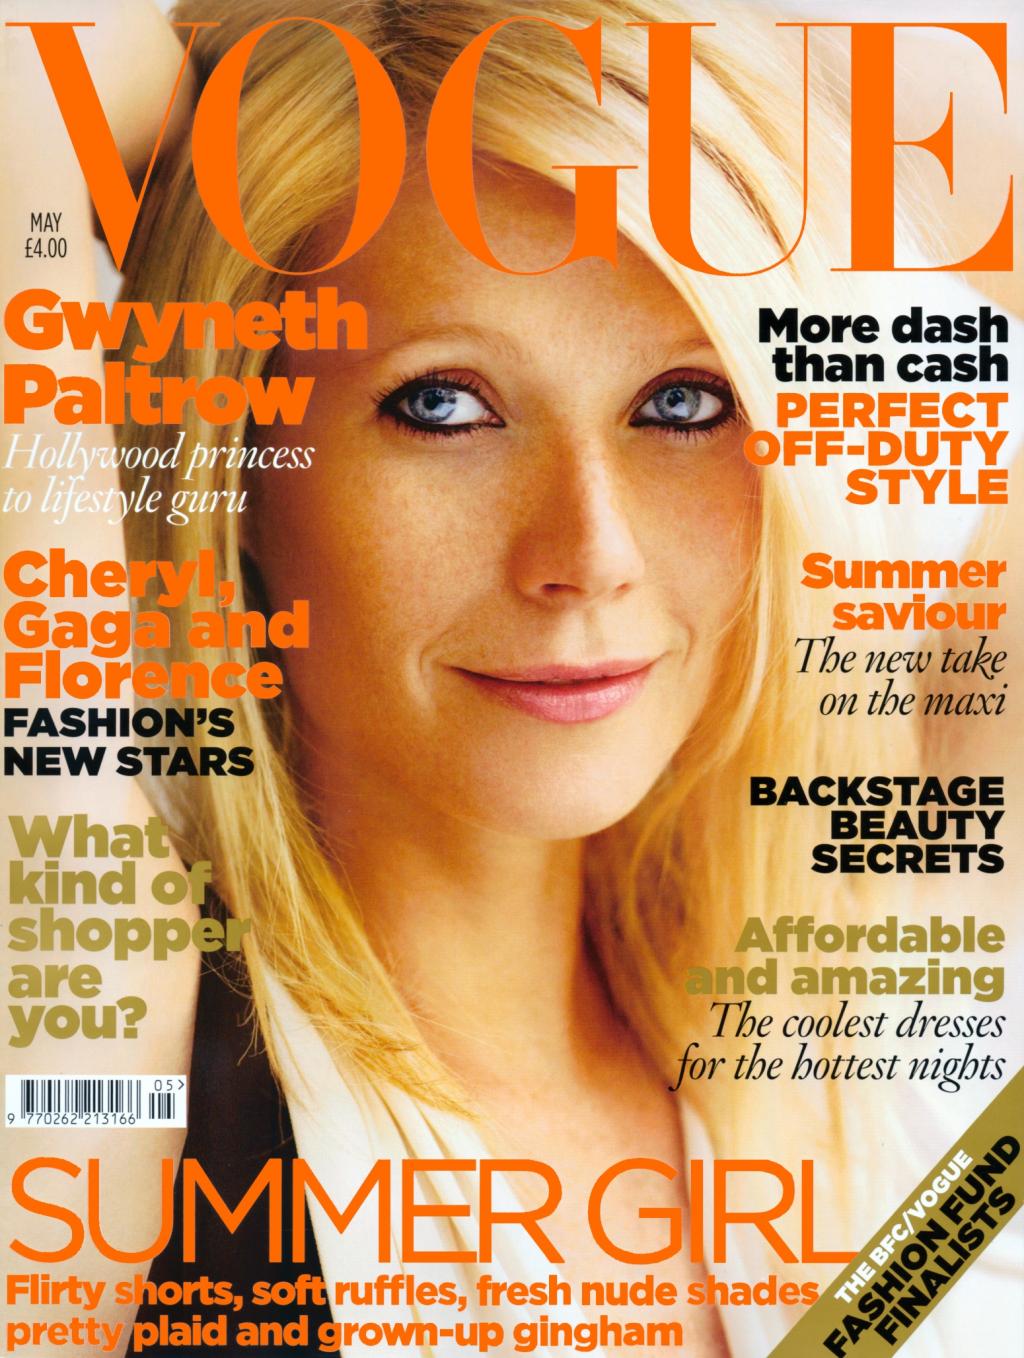 http://1.bp.blogspot.com/_aBZm-R5HKEM/S-XVnS-IvpI/AAAAAAAAI9g/ox-iTH1U_fw/s1600/Gwyneth+Paltrow+Vogue+UK.jpg